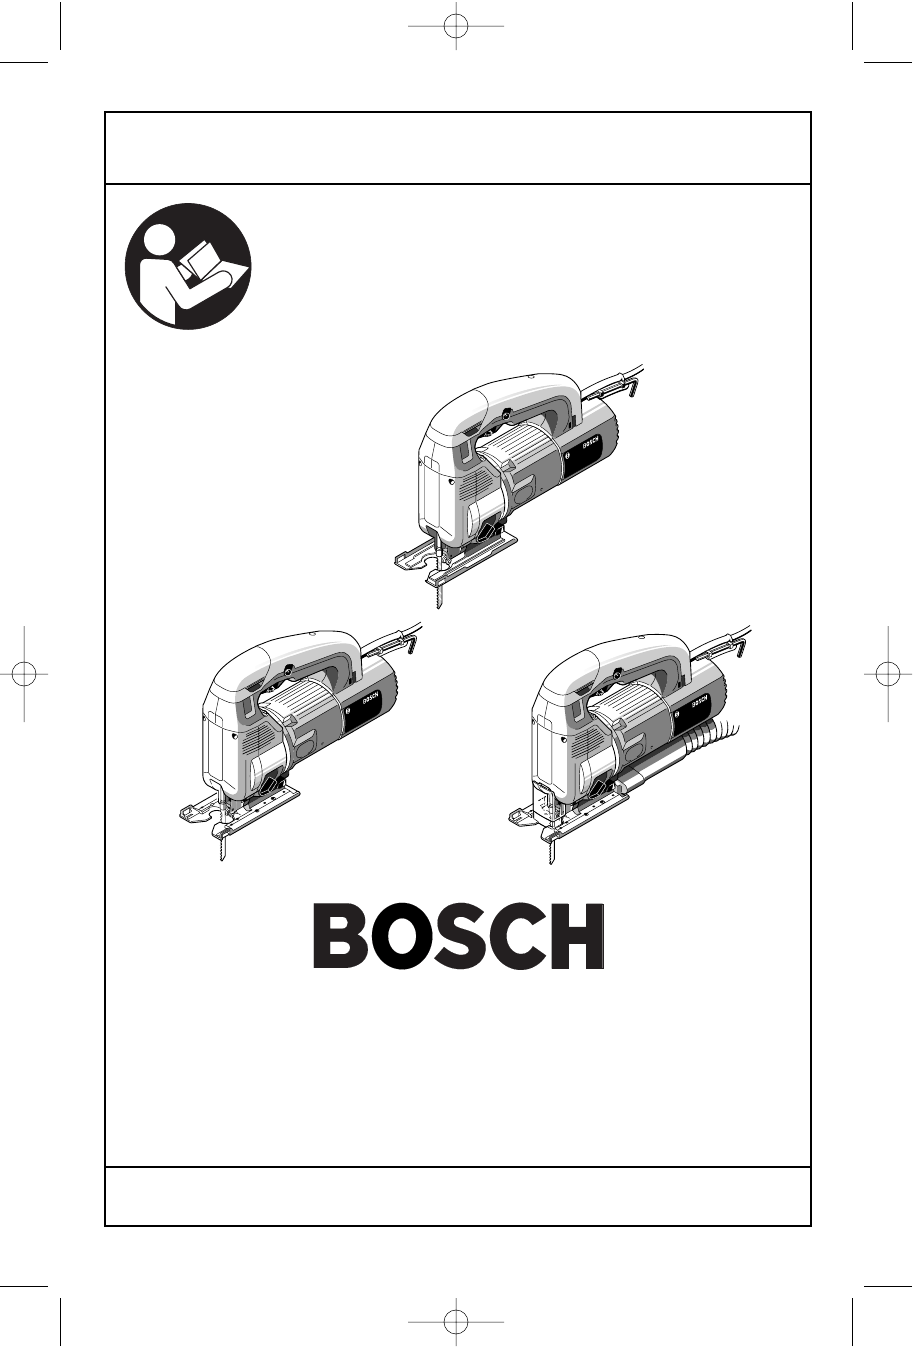 Bosch jigsaw instruction manual